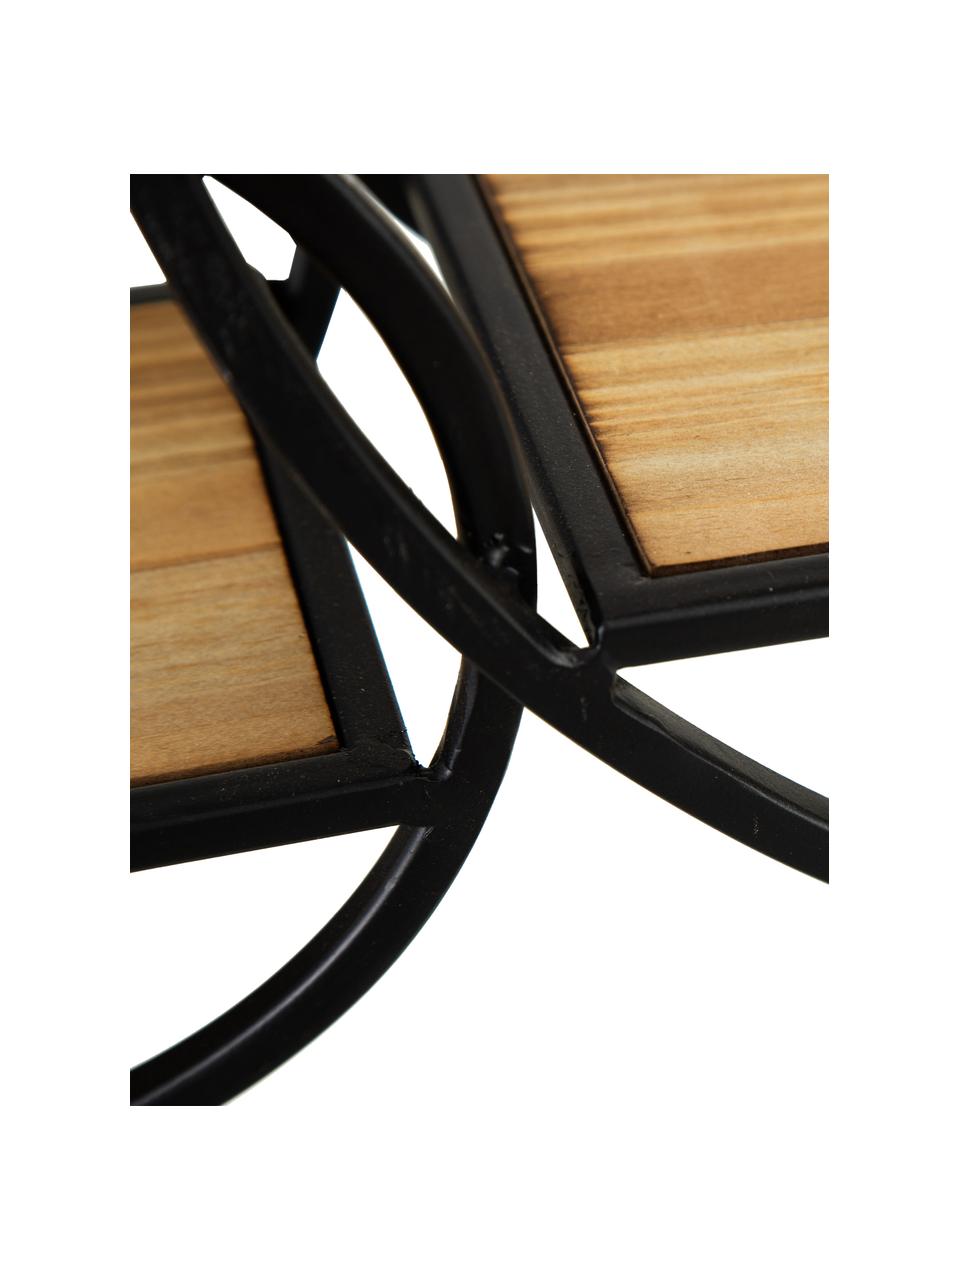 Nástěnný regál z dřeva a kovu Circles, Černá, hnědá, Š 84 cm, V 54 cm